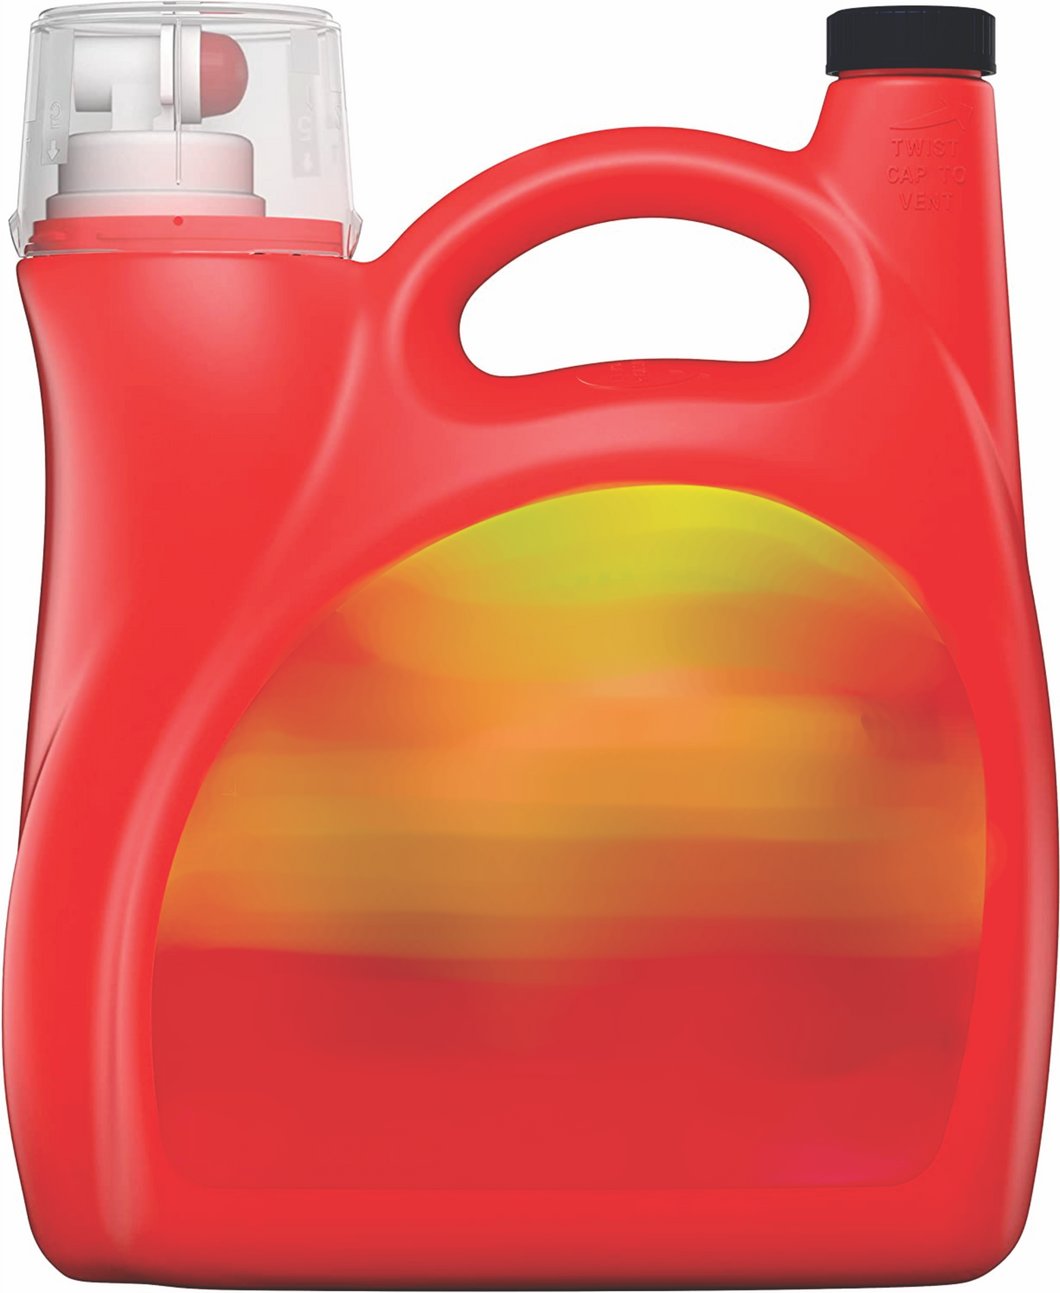 Apple Mango Tango (Compare to Gain©) Fragrance Oil